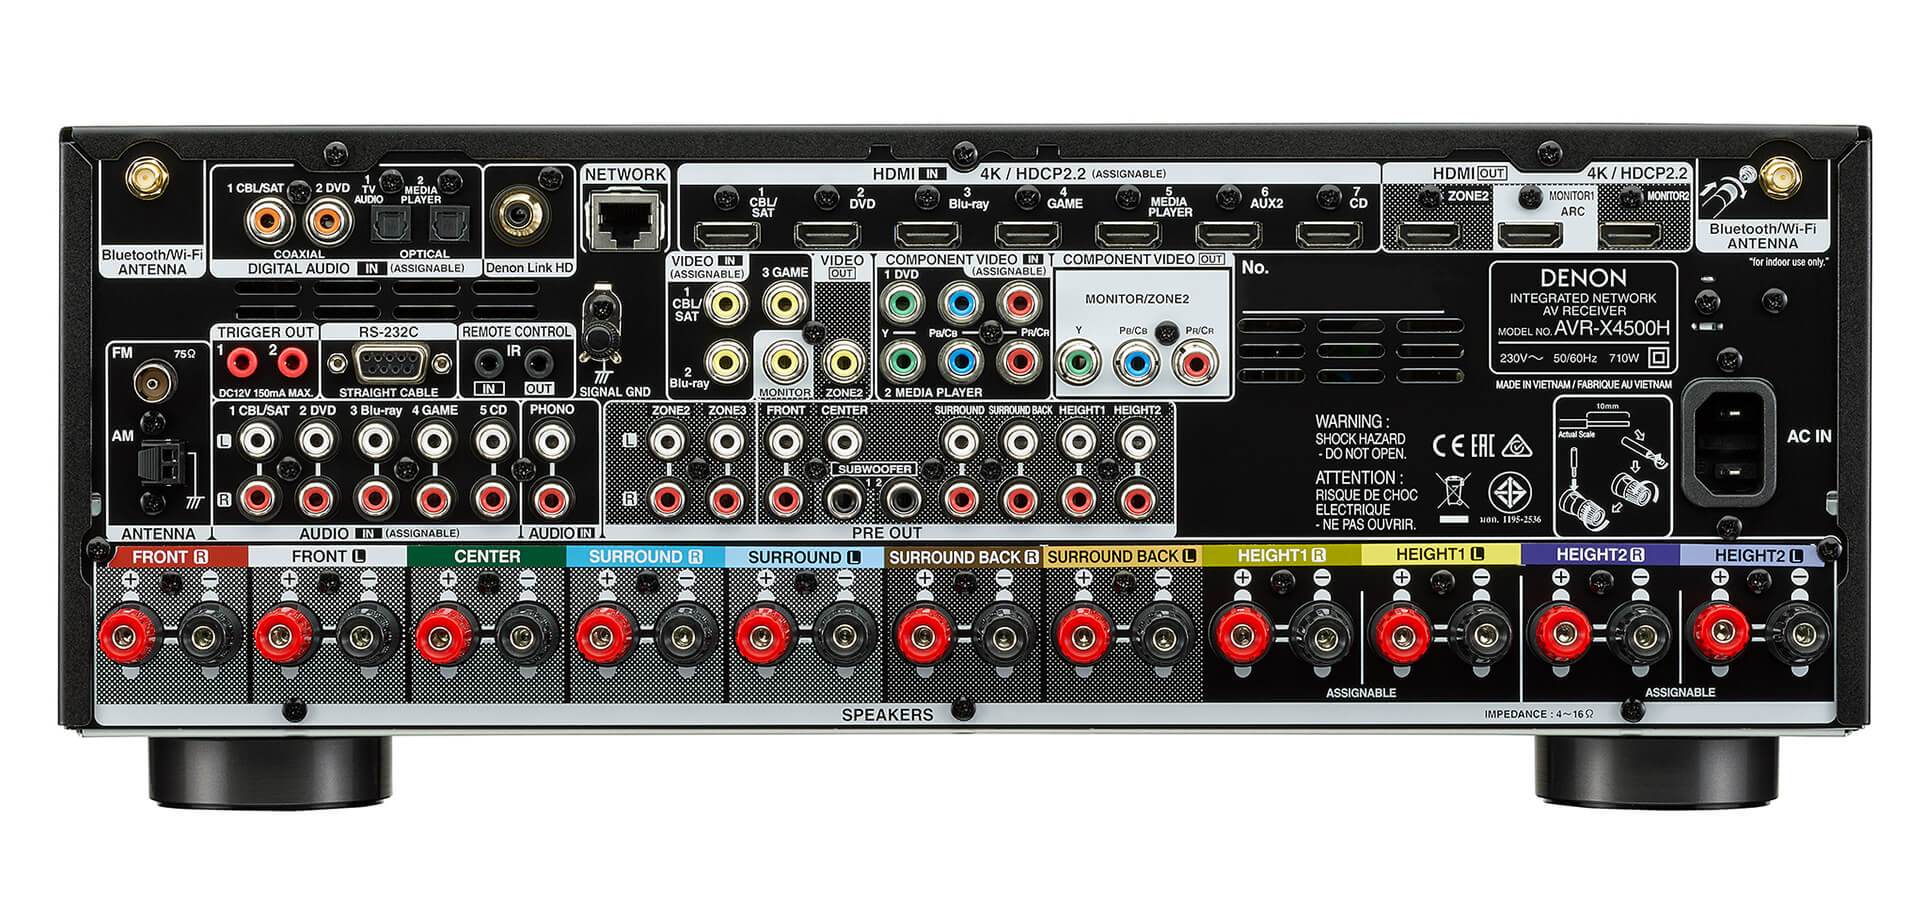 AVR-X4500H Denon Amplificador AV - Audio y Video - klibtech